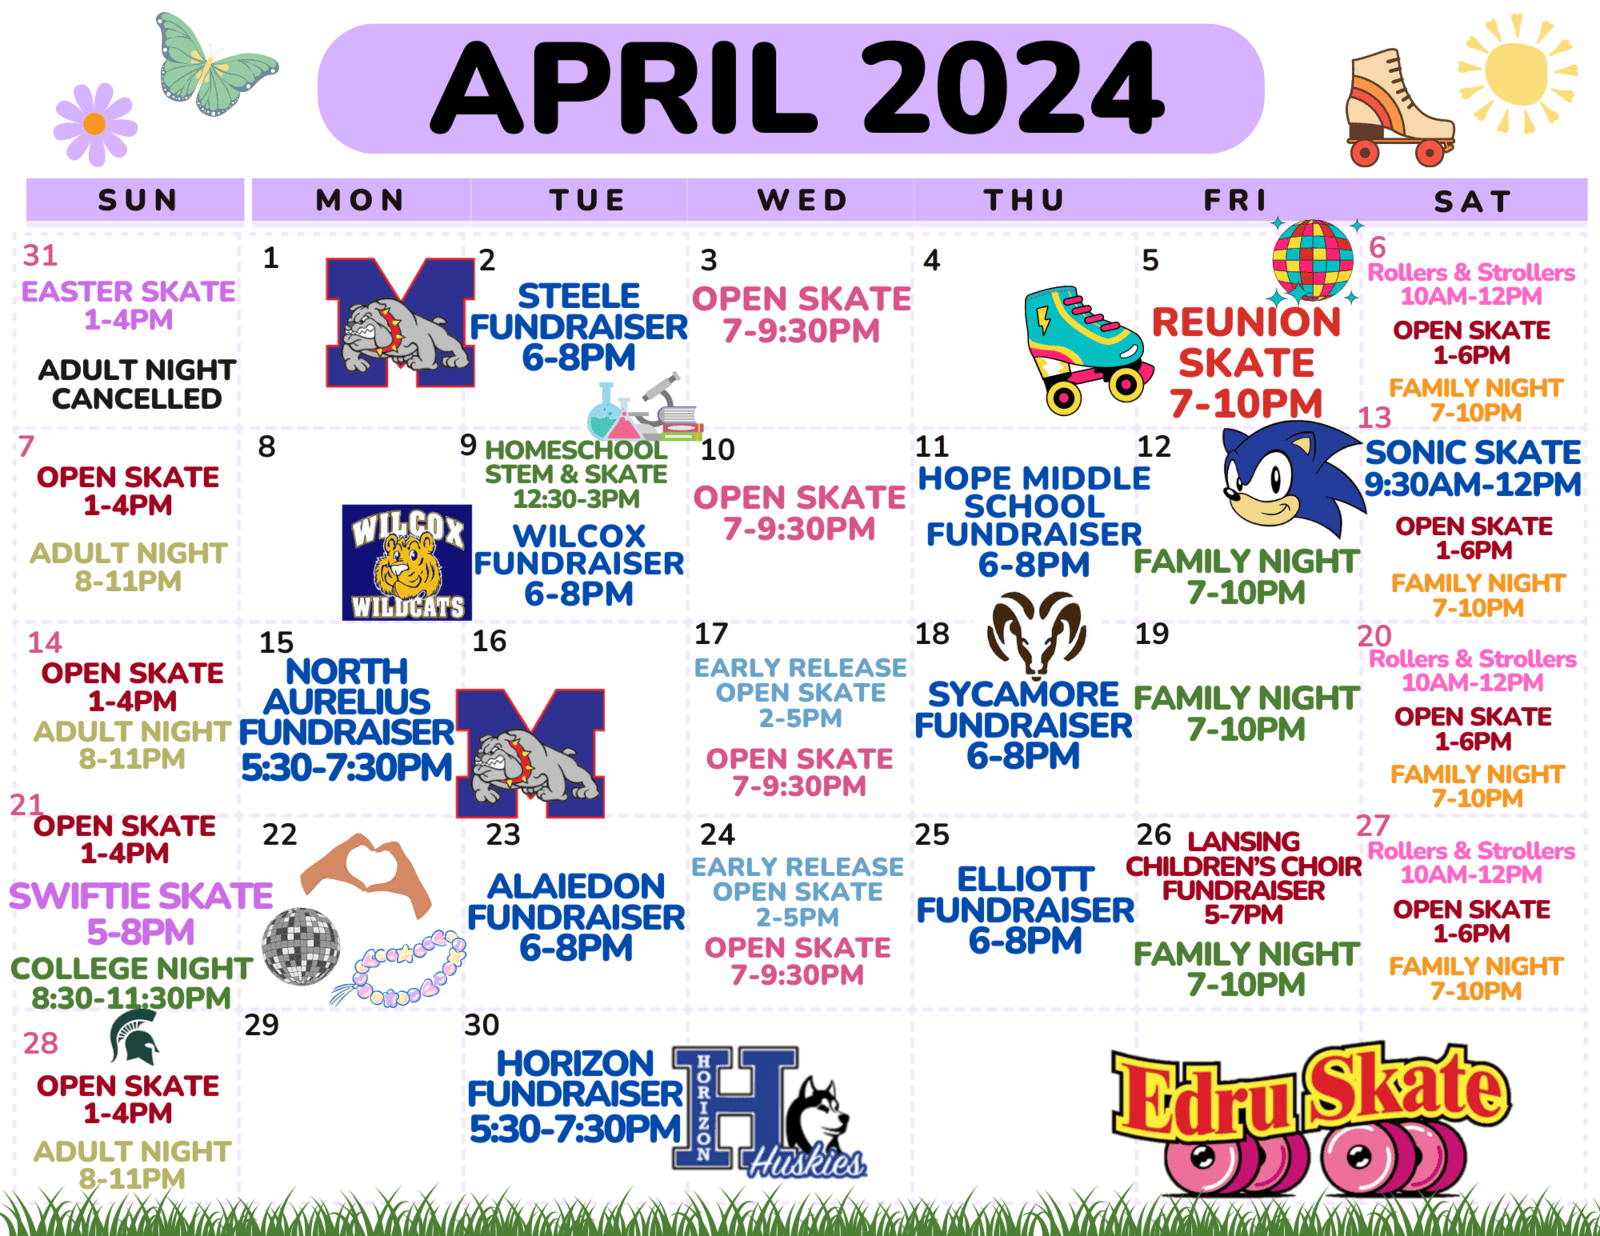 April Calendar Edru (2)